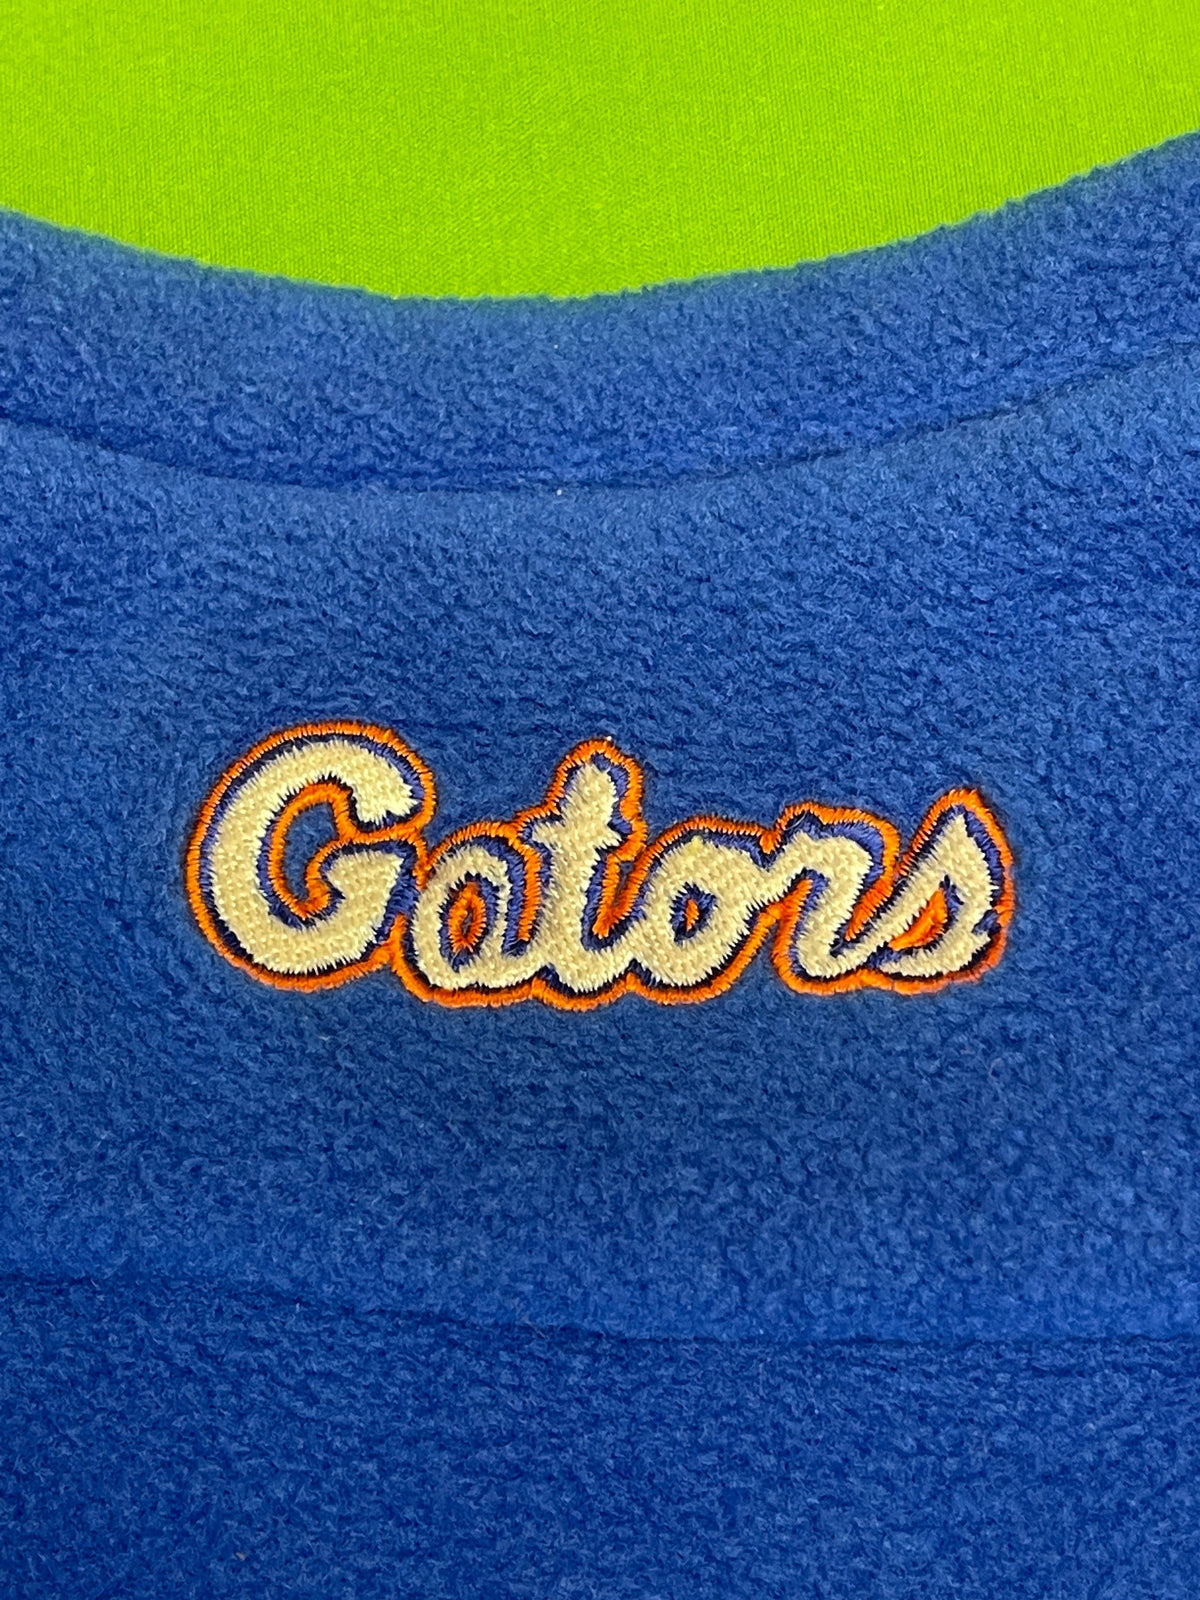 NCAA Florida Gators Full-Zip Fleece Gilet Men's X-Large